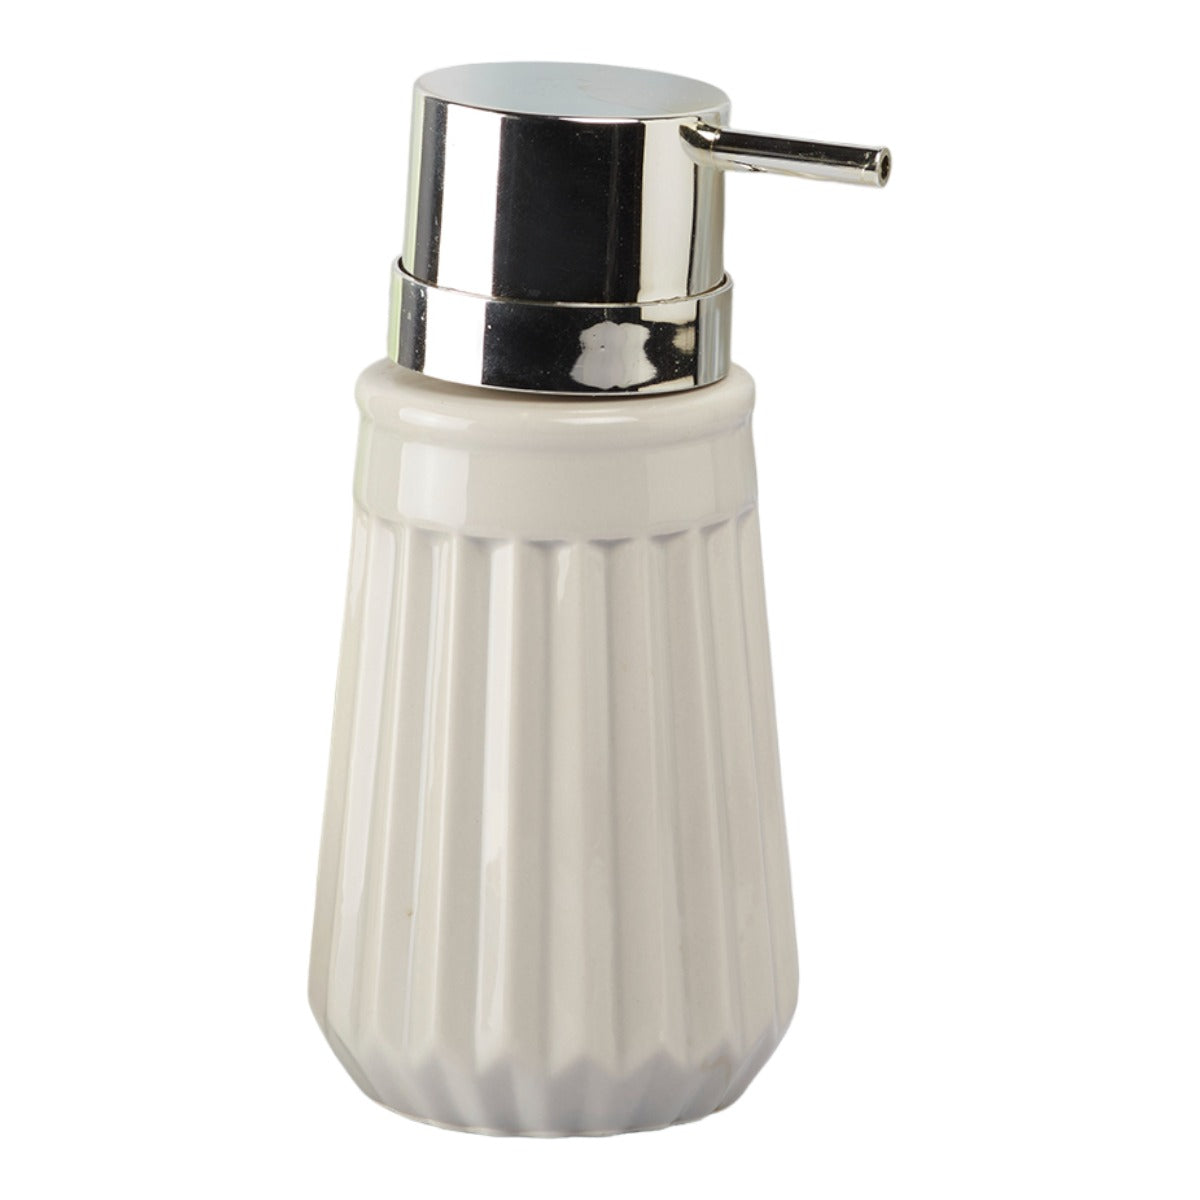 Ceramic Soap Dispenser handwash Pump for Bathroom, Set of 1, Grey (7983)